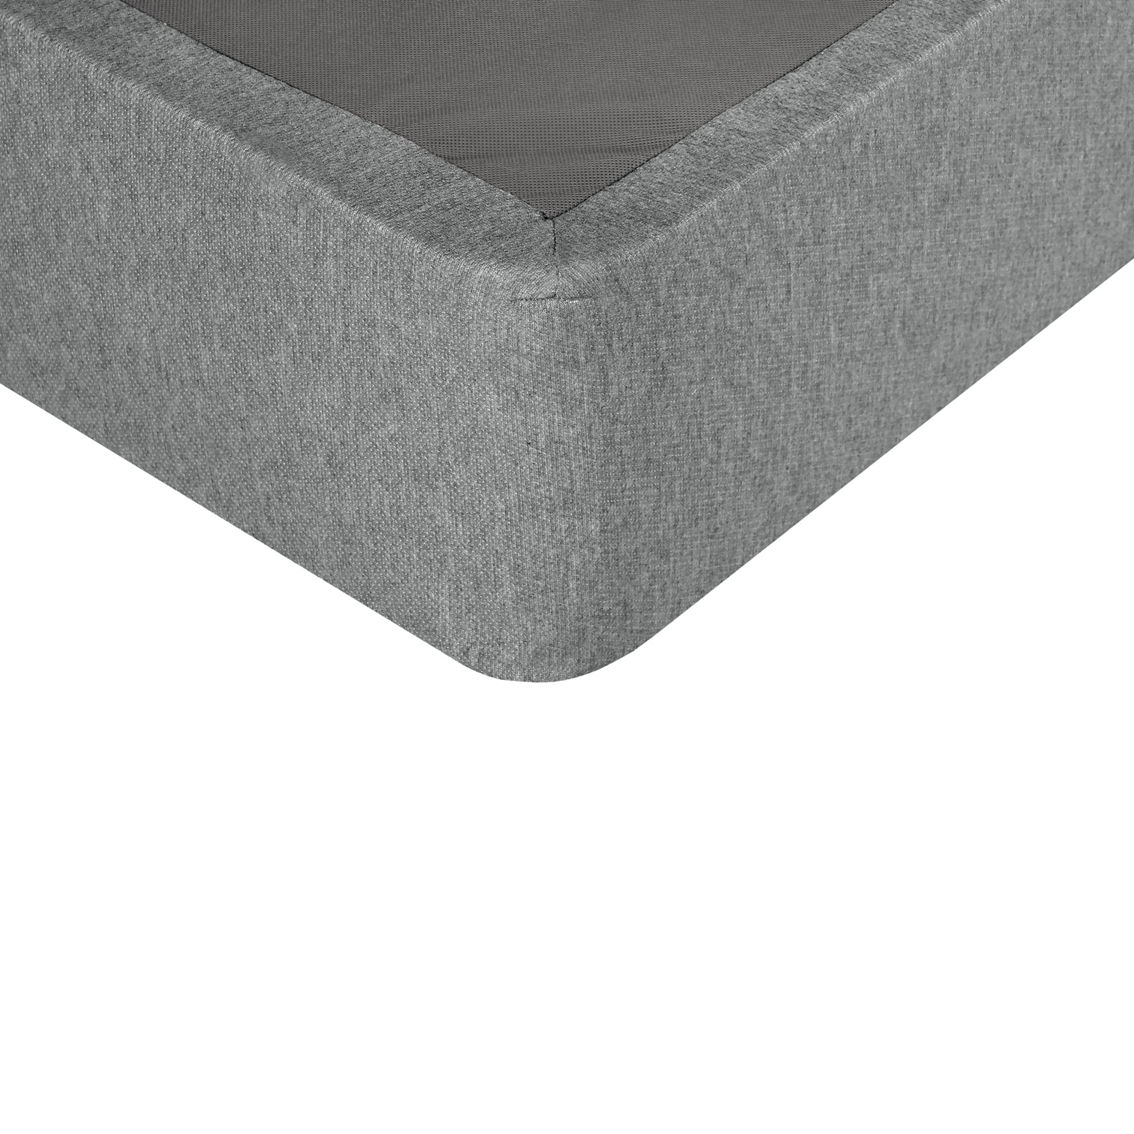 Primo International Delta Upholstered Folding Foundation - Image 4 of 7